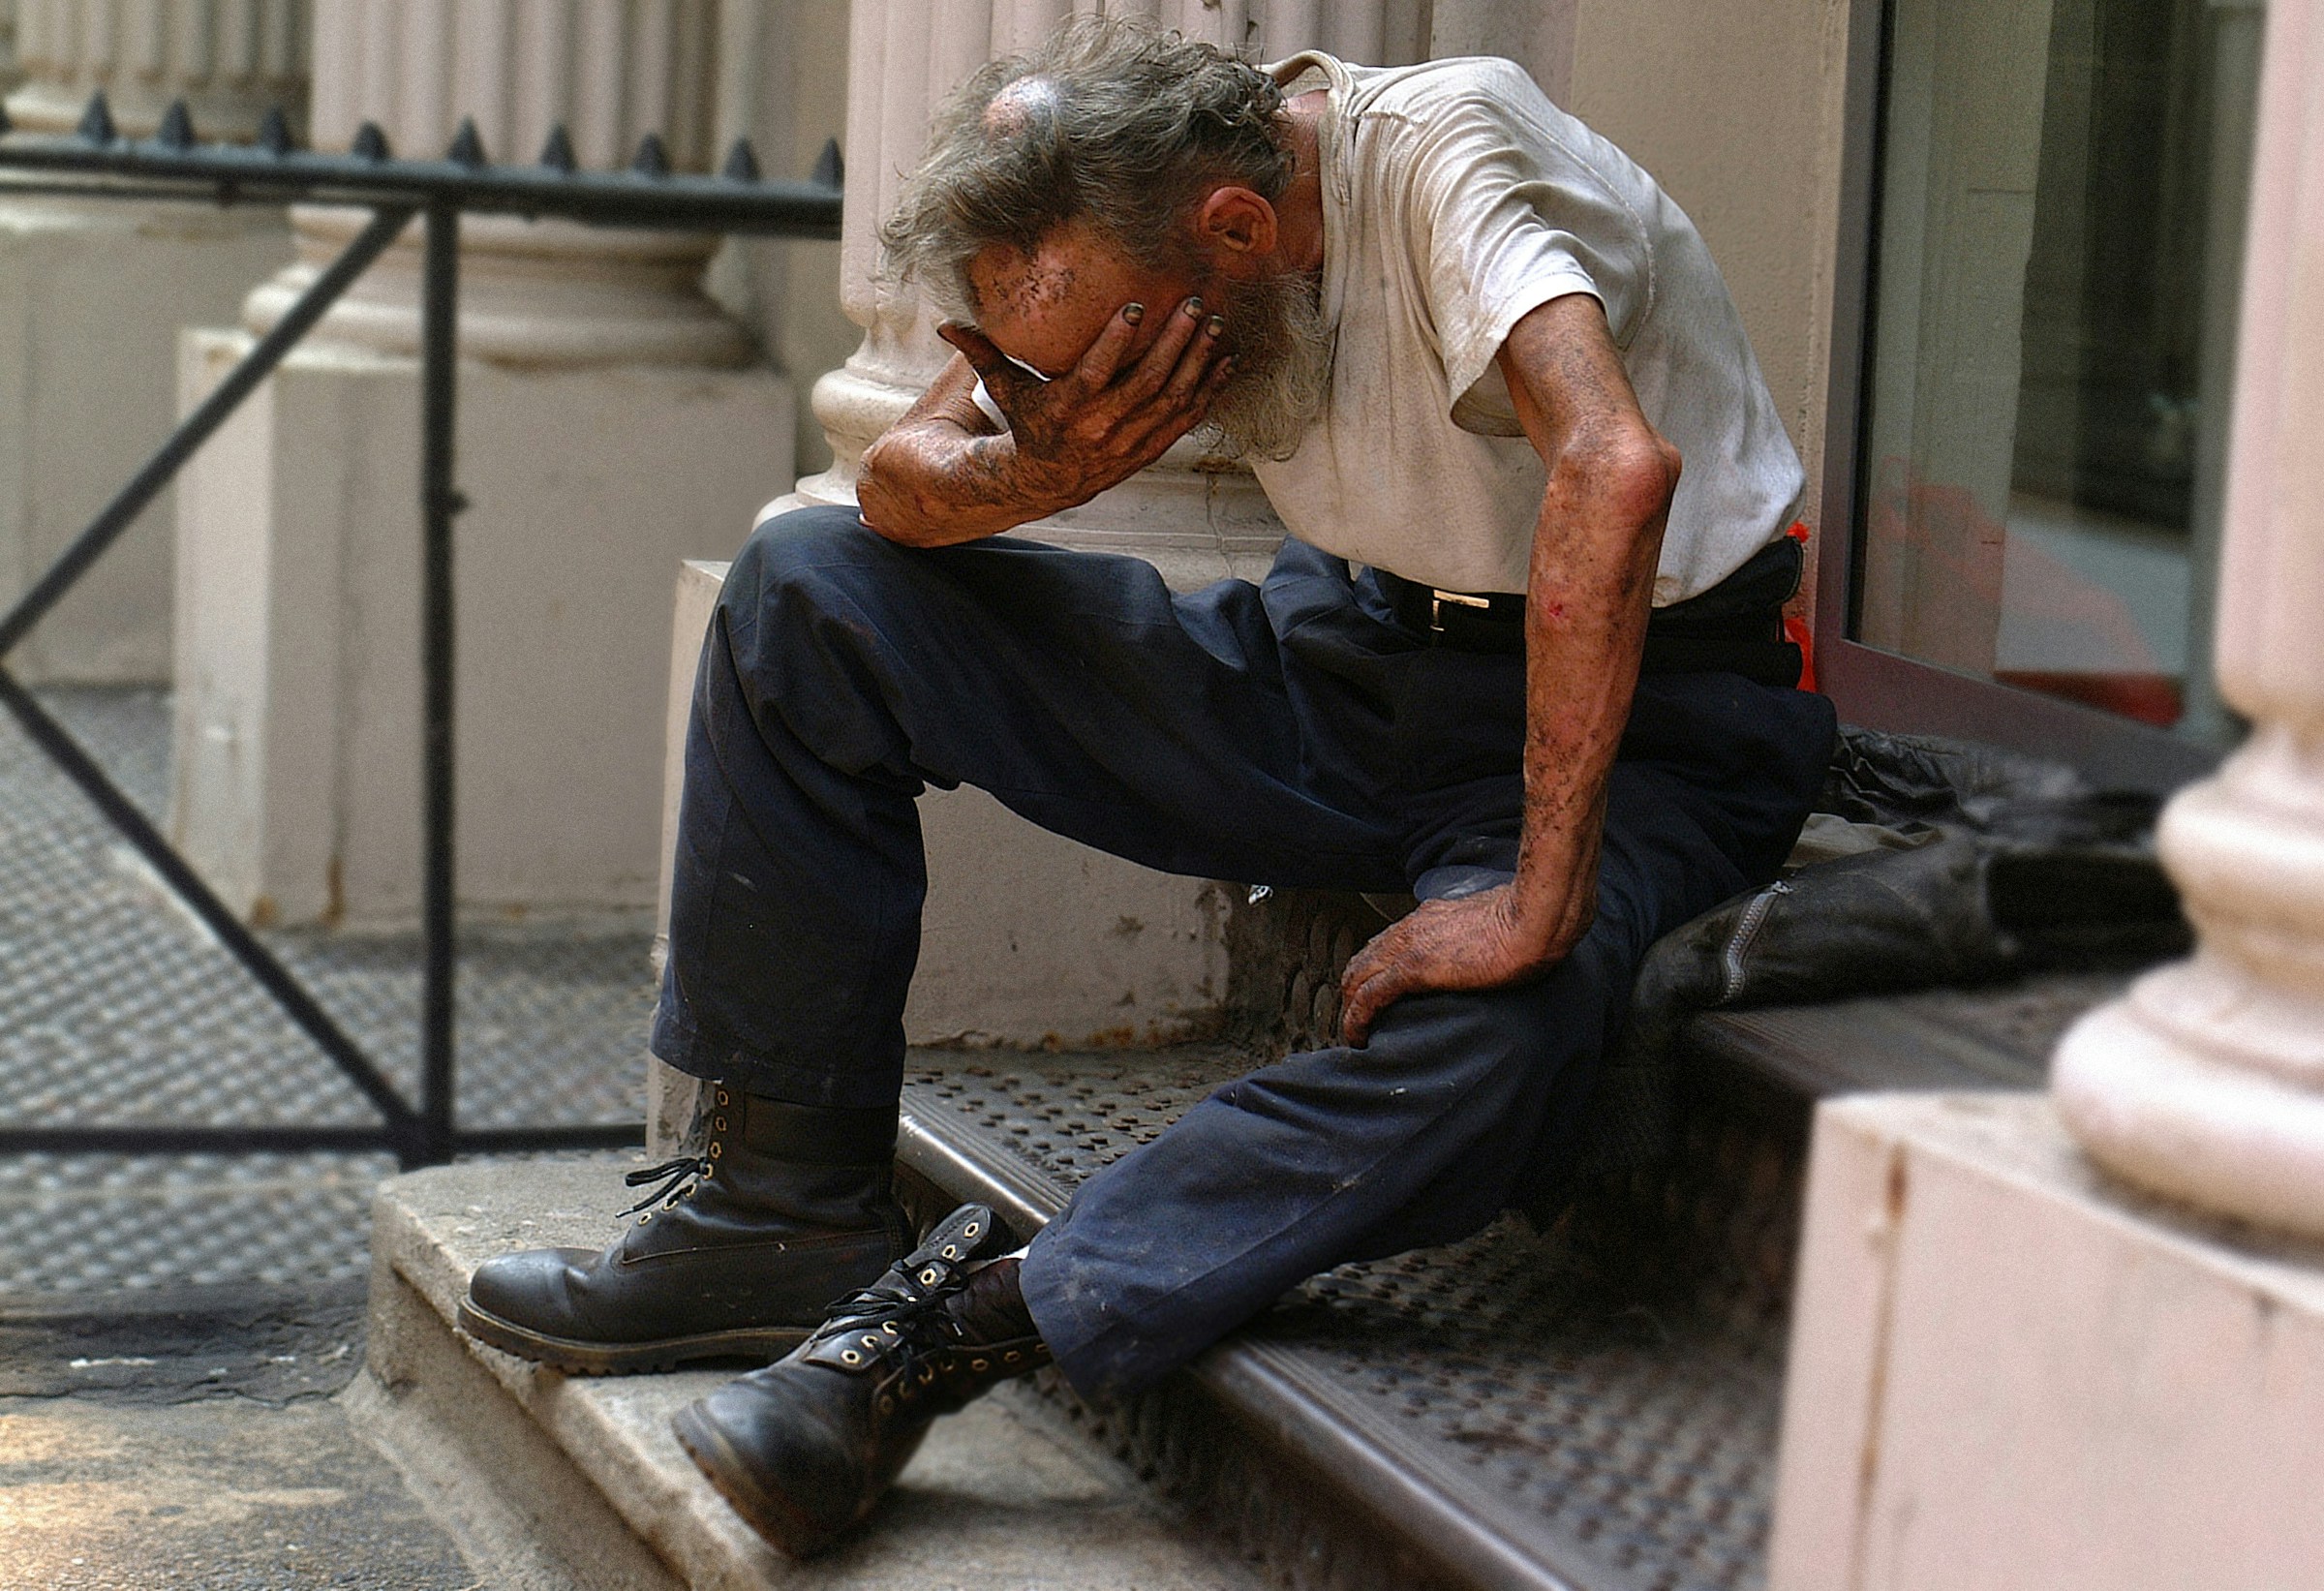 A sad homeless man | Source: Unsplash